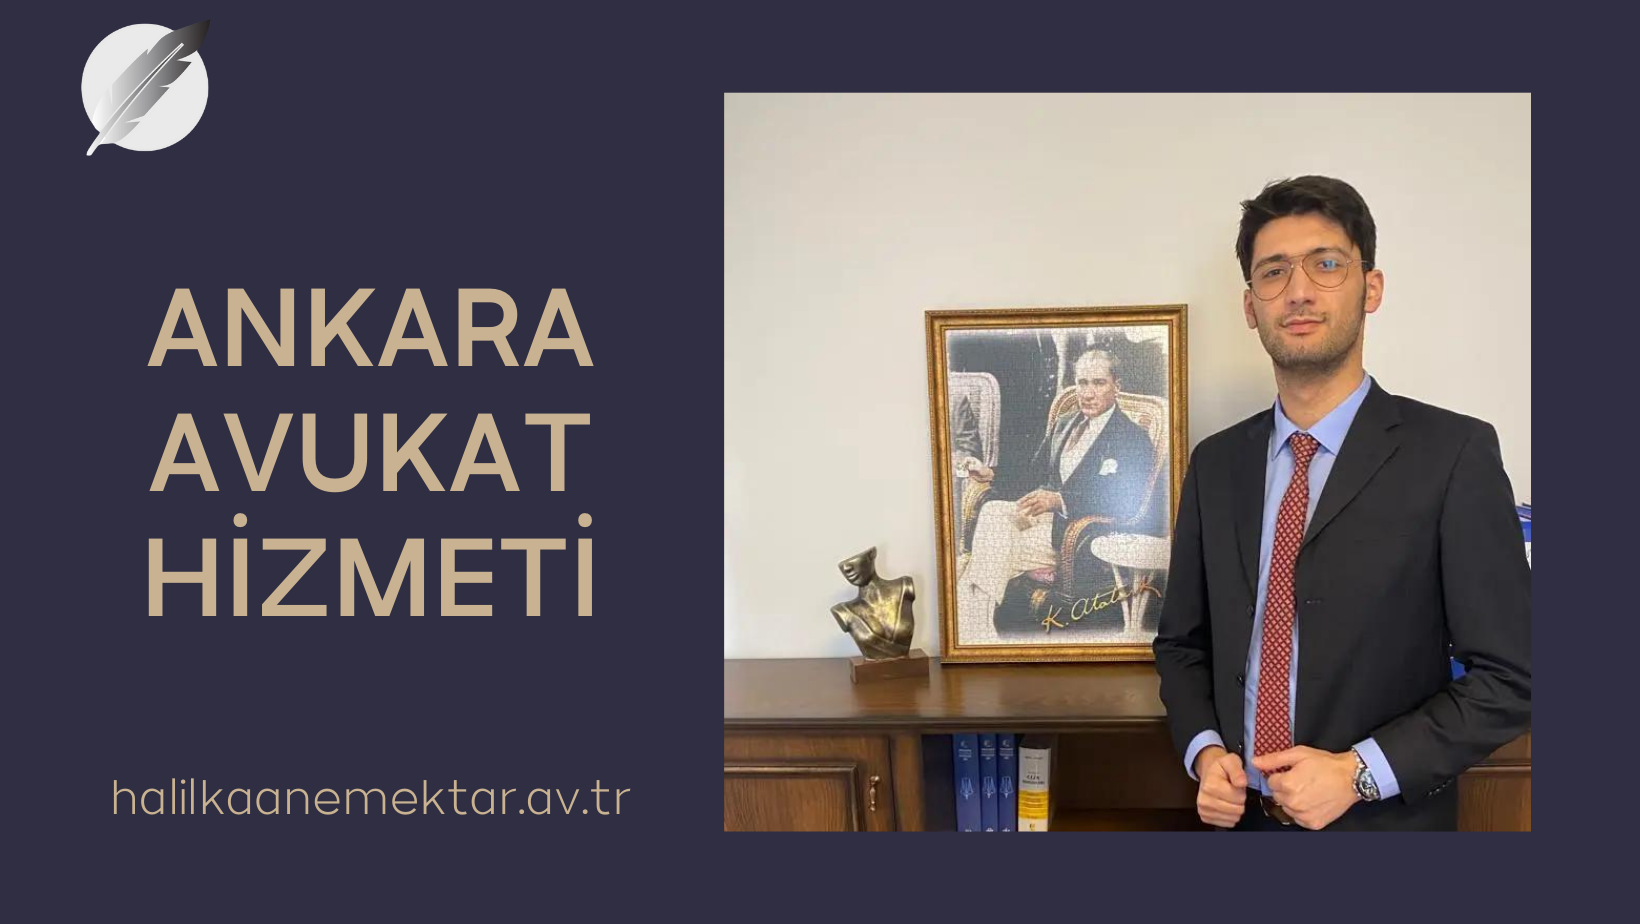 Ankara Avukat Hizmeti